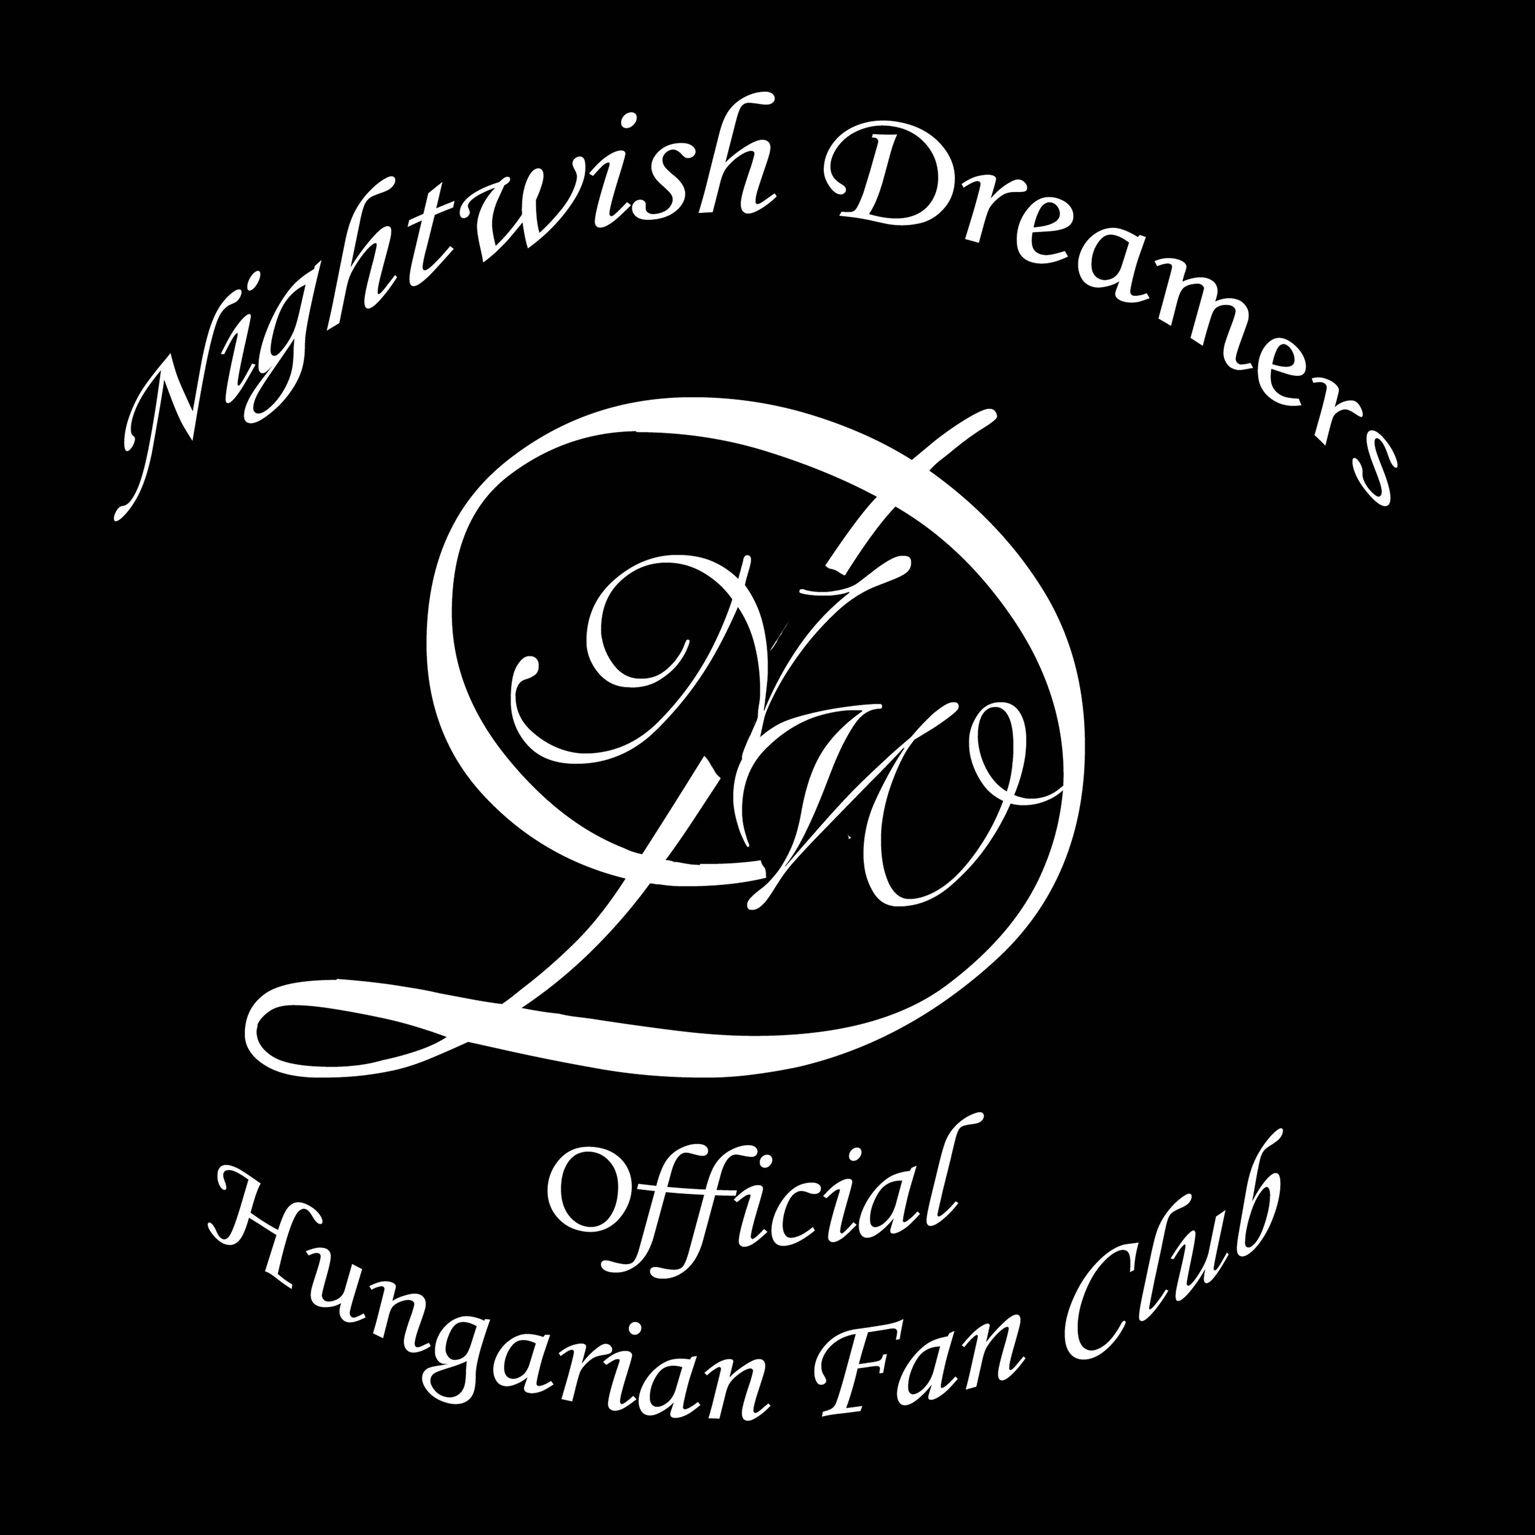 Dreamers Logo - Nightwish Dreamers